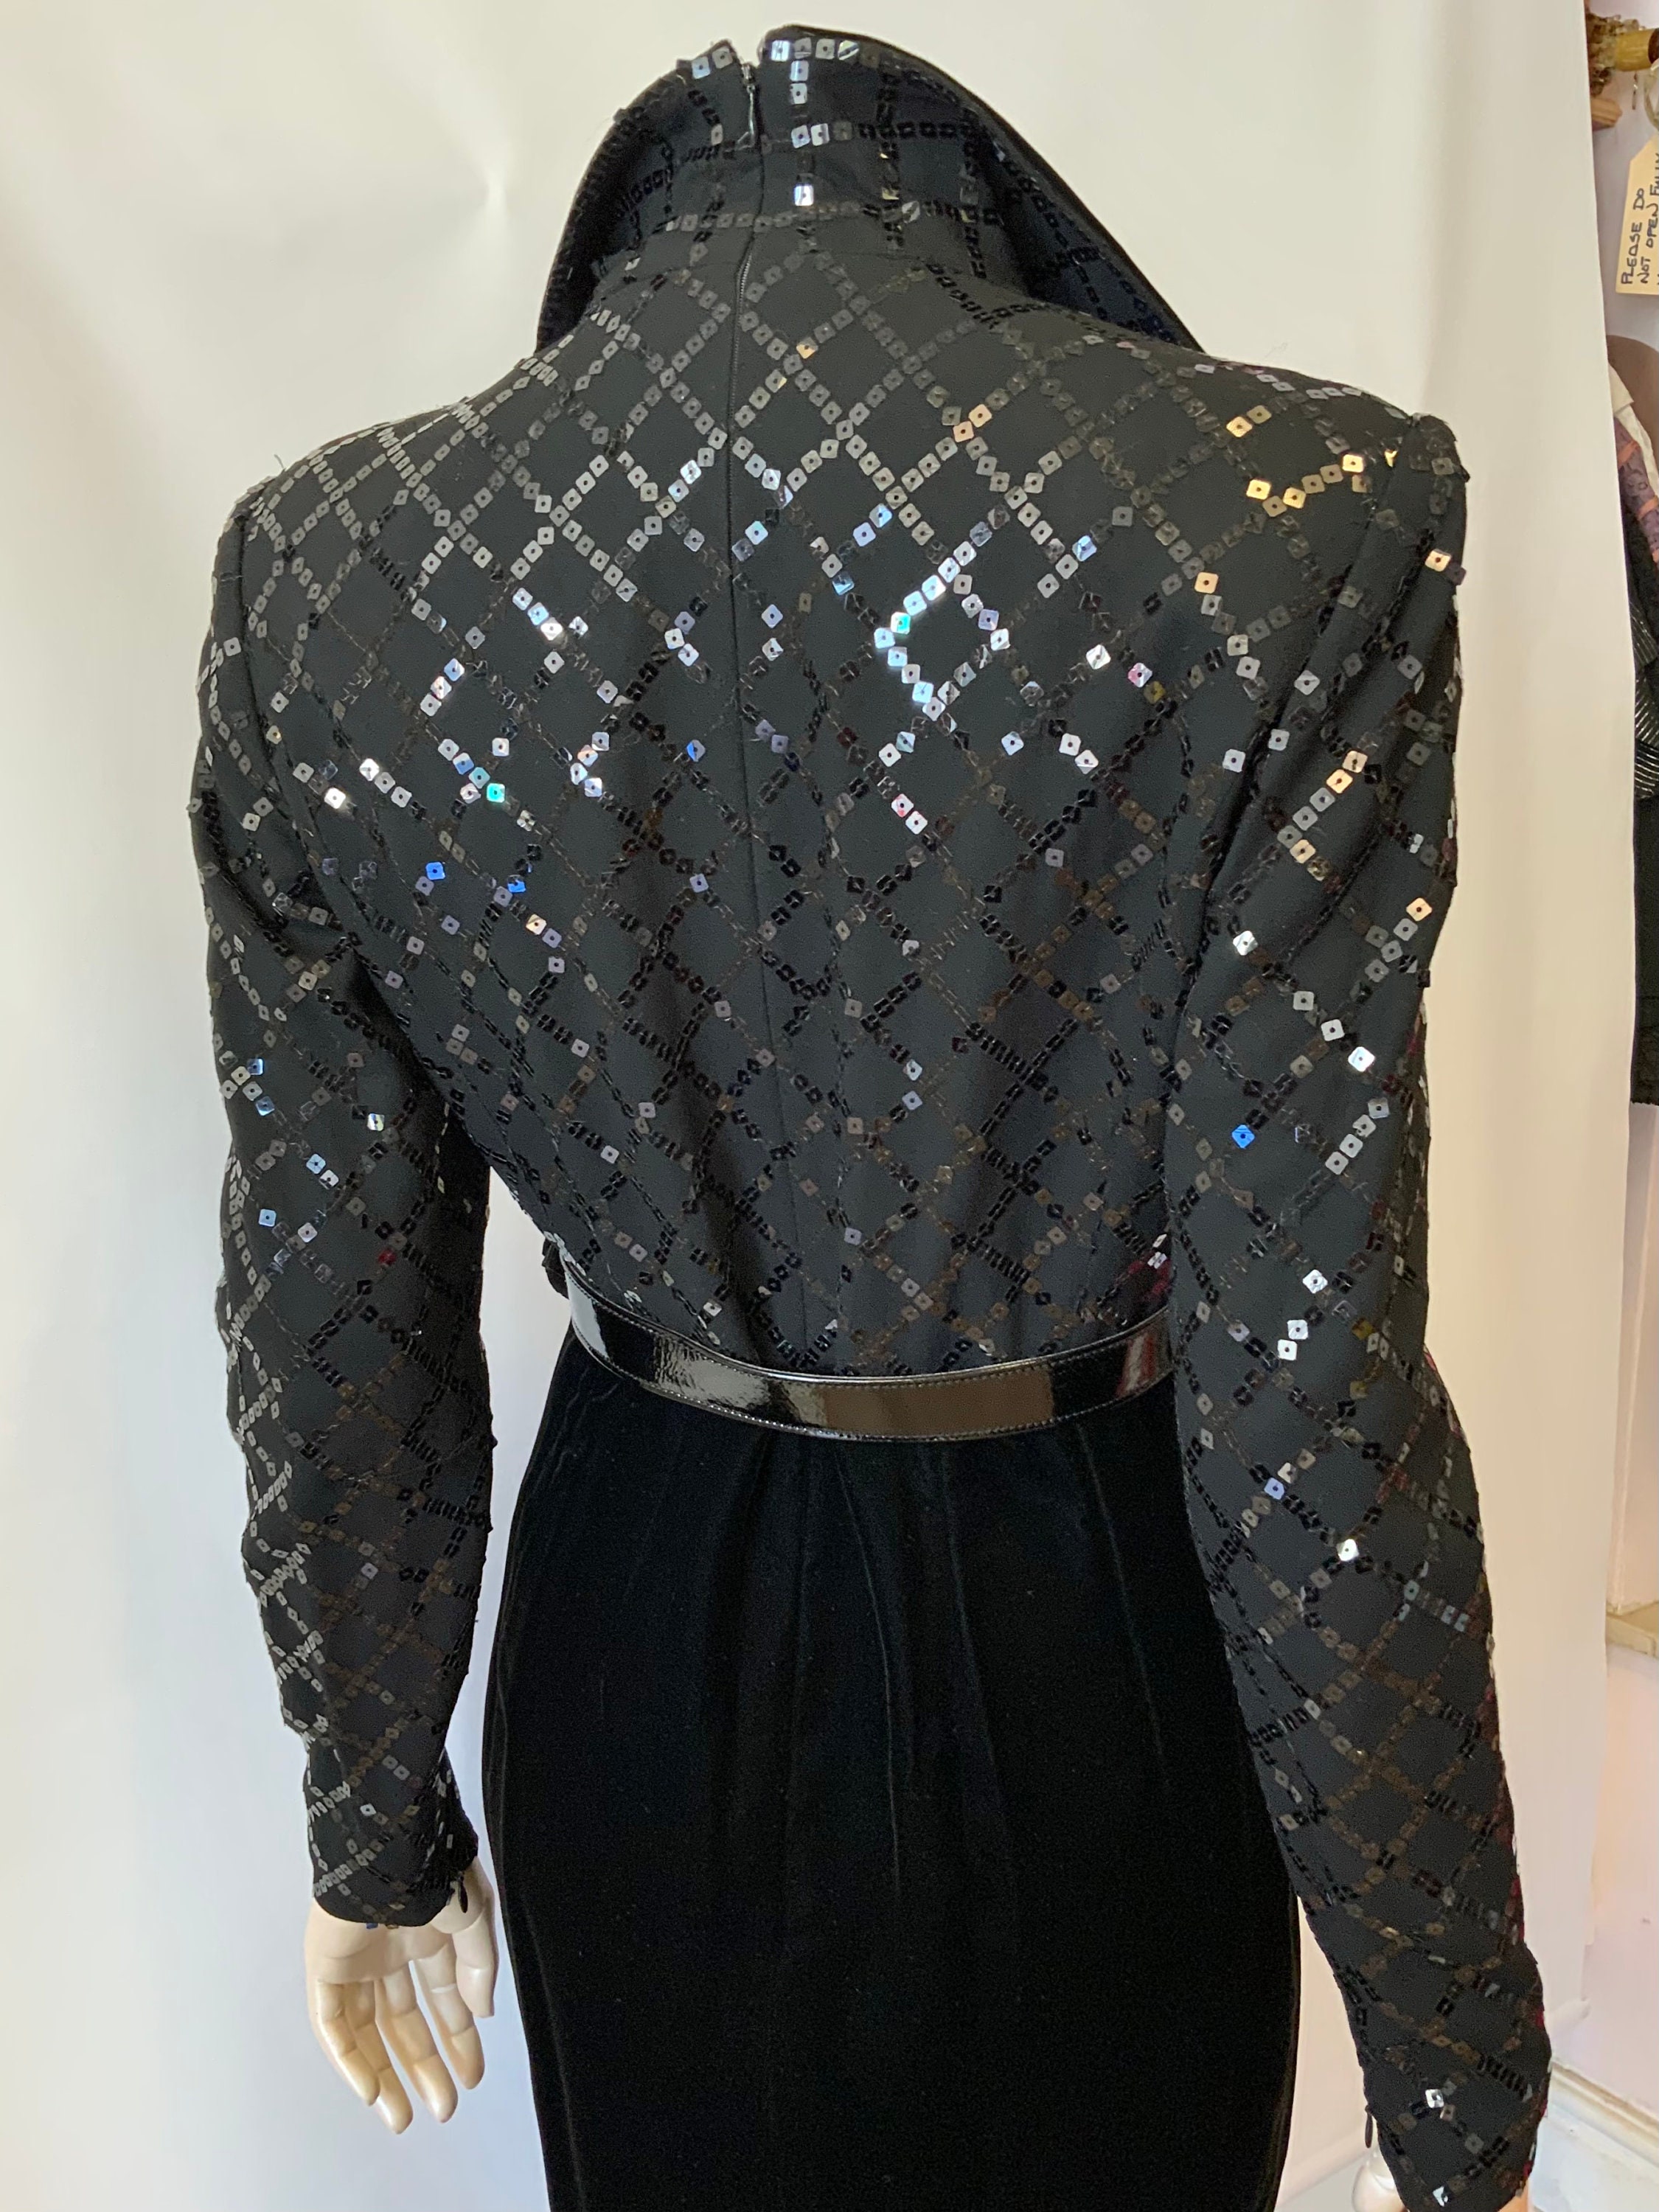 Jean Louis Scherrer Couture Black Velvet and Sequinned Dress 